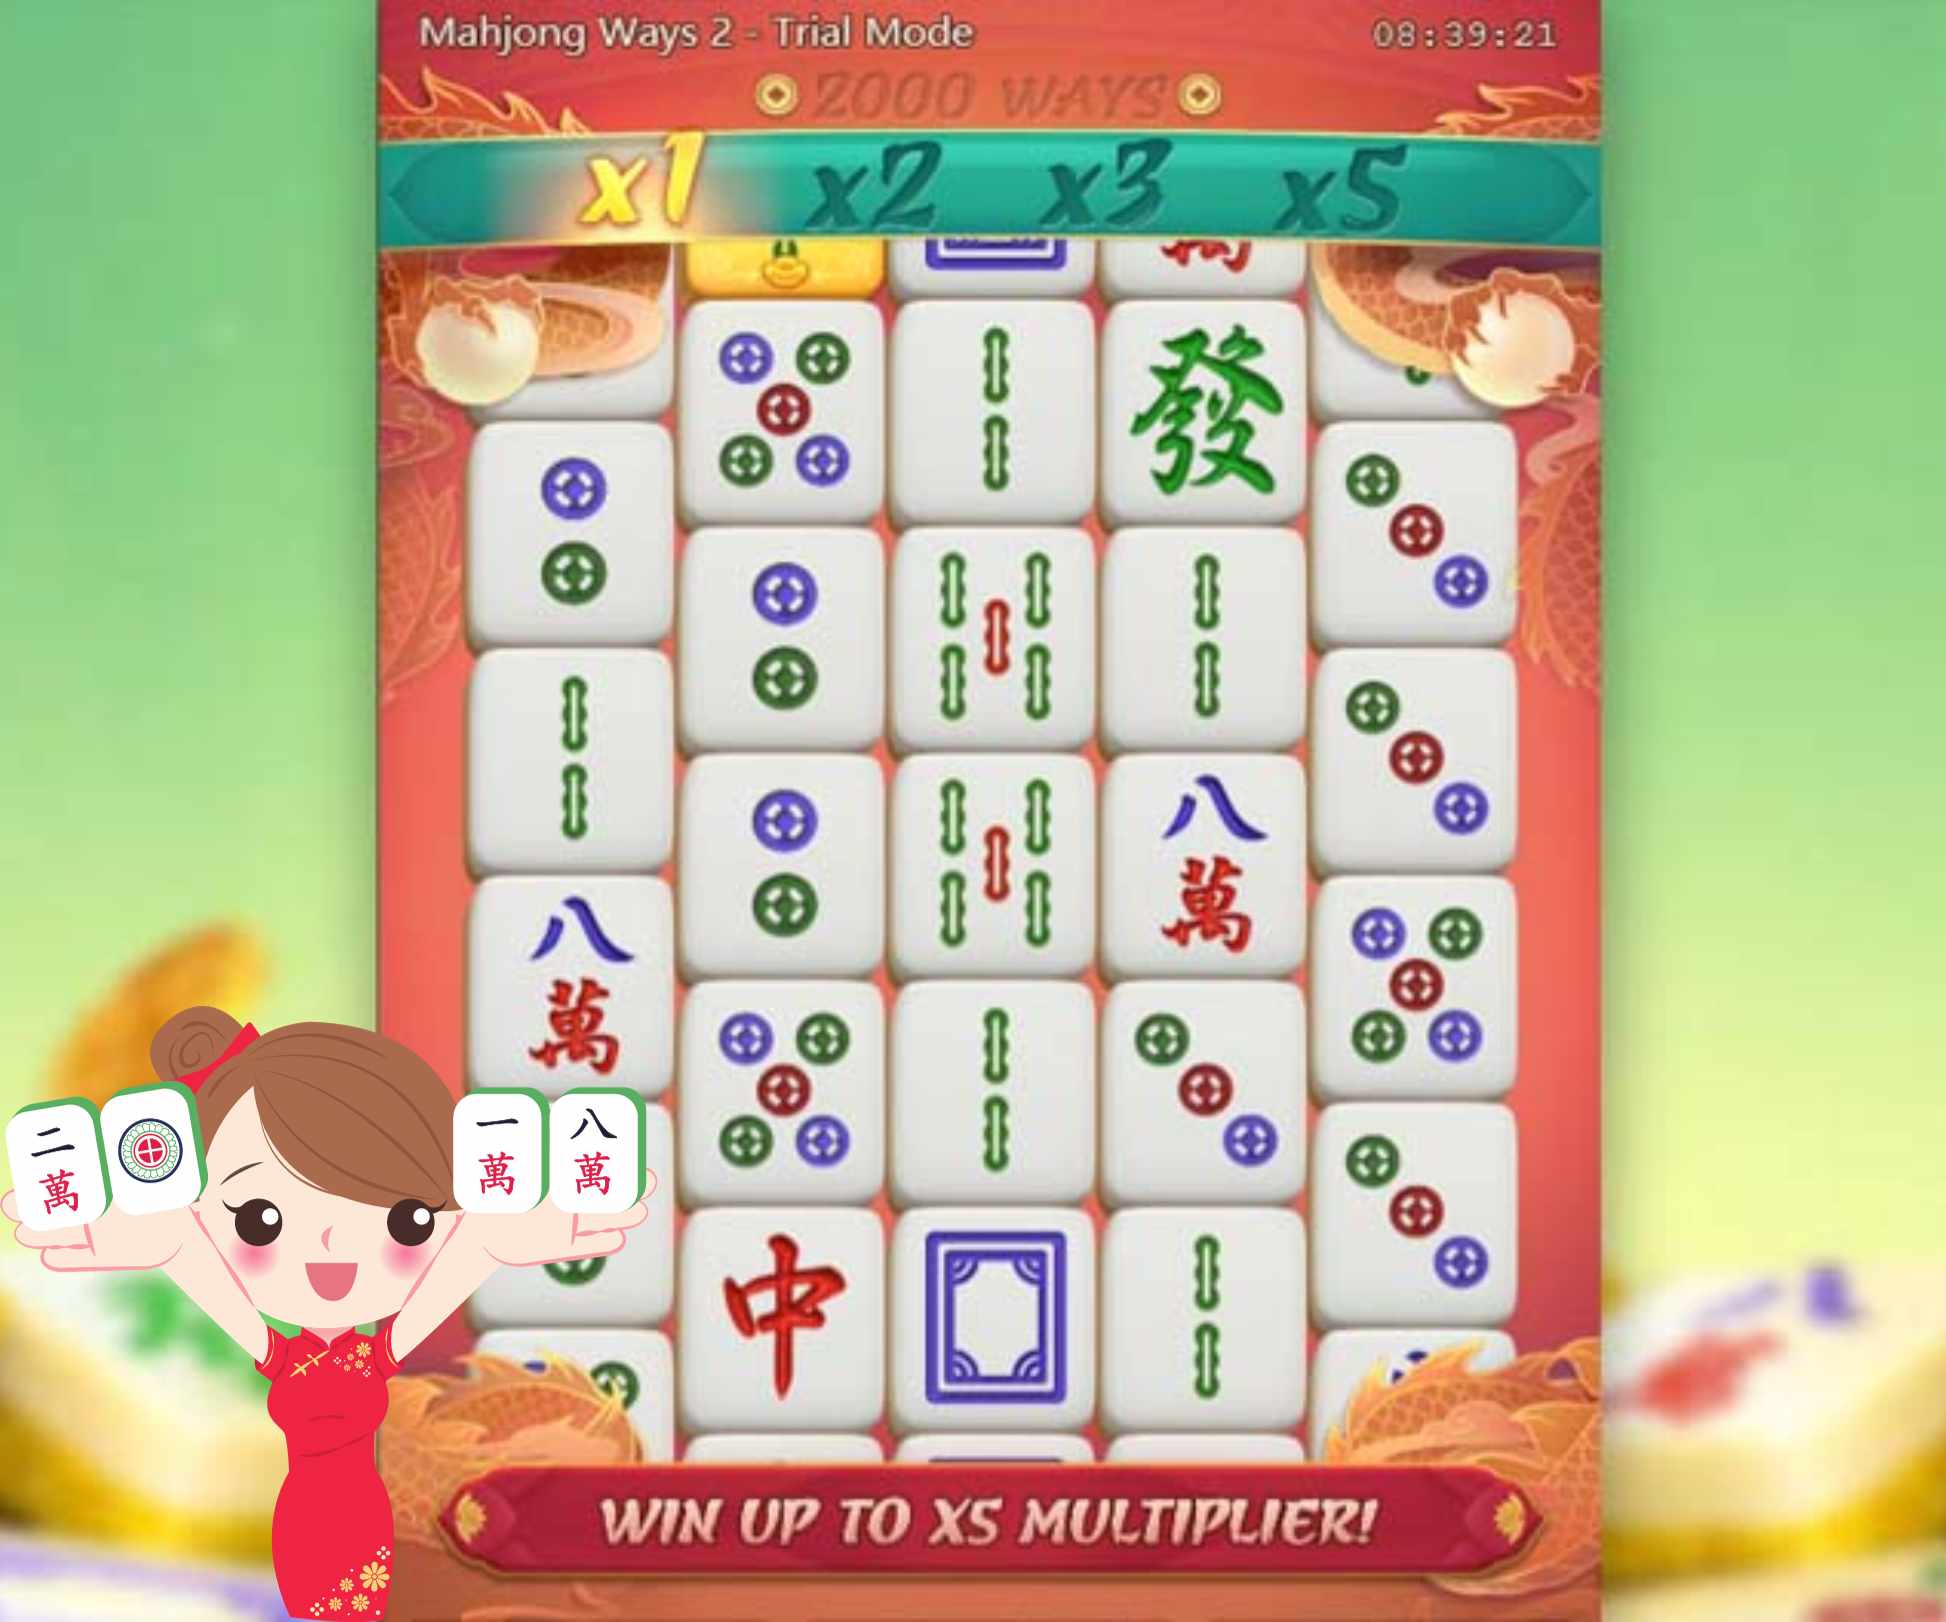 It's fun playing the game Mahjong Ways 2